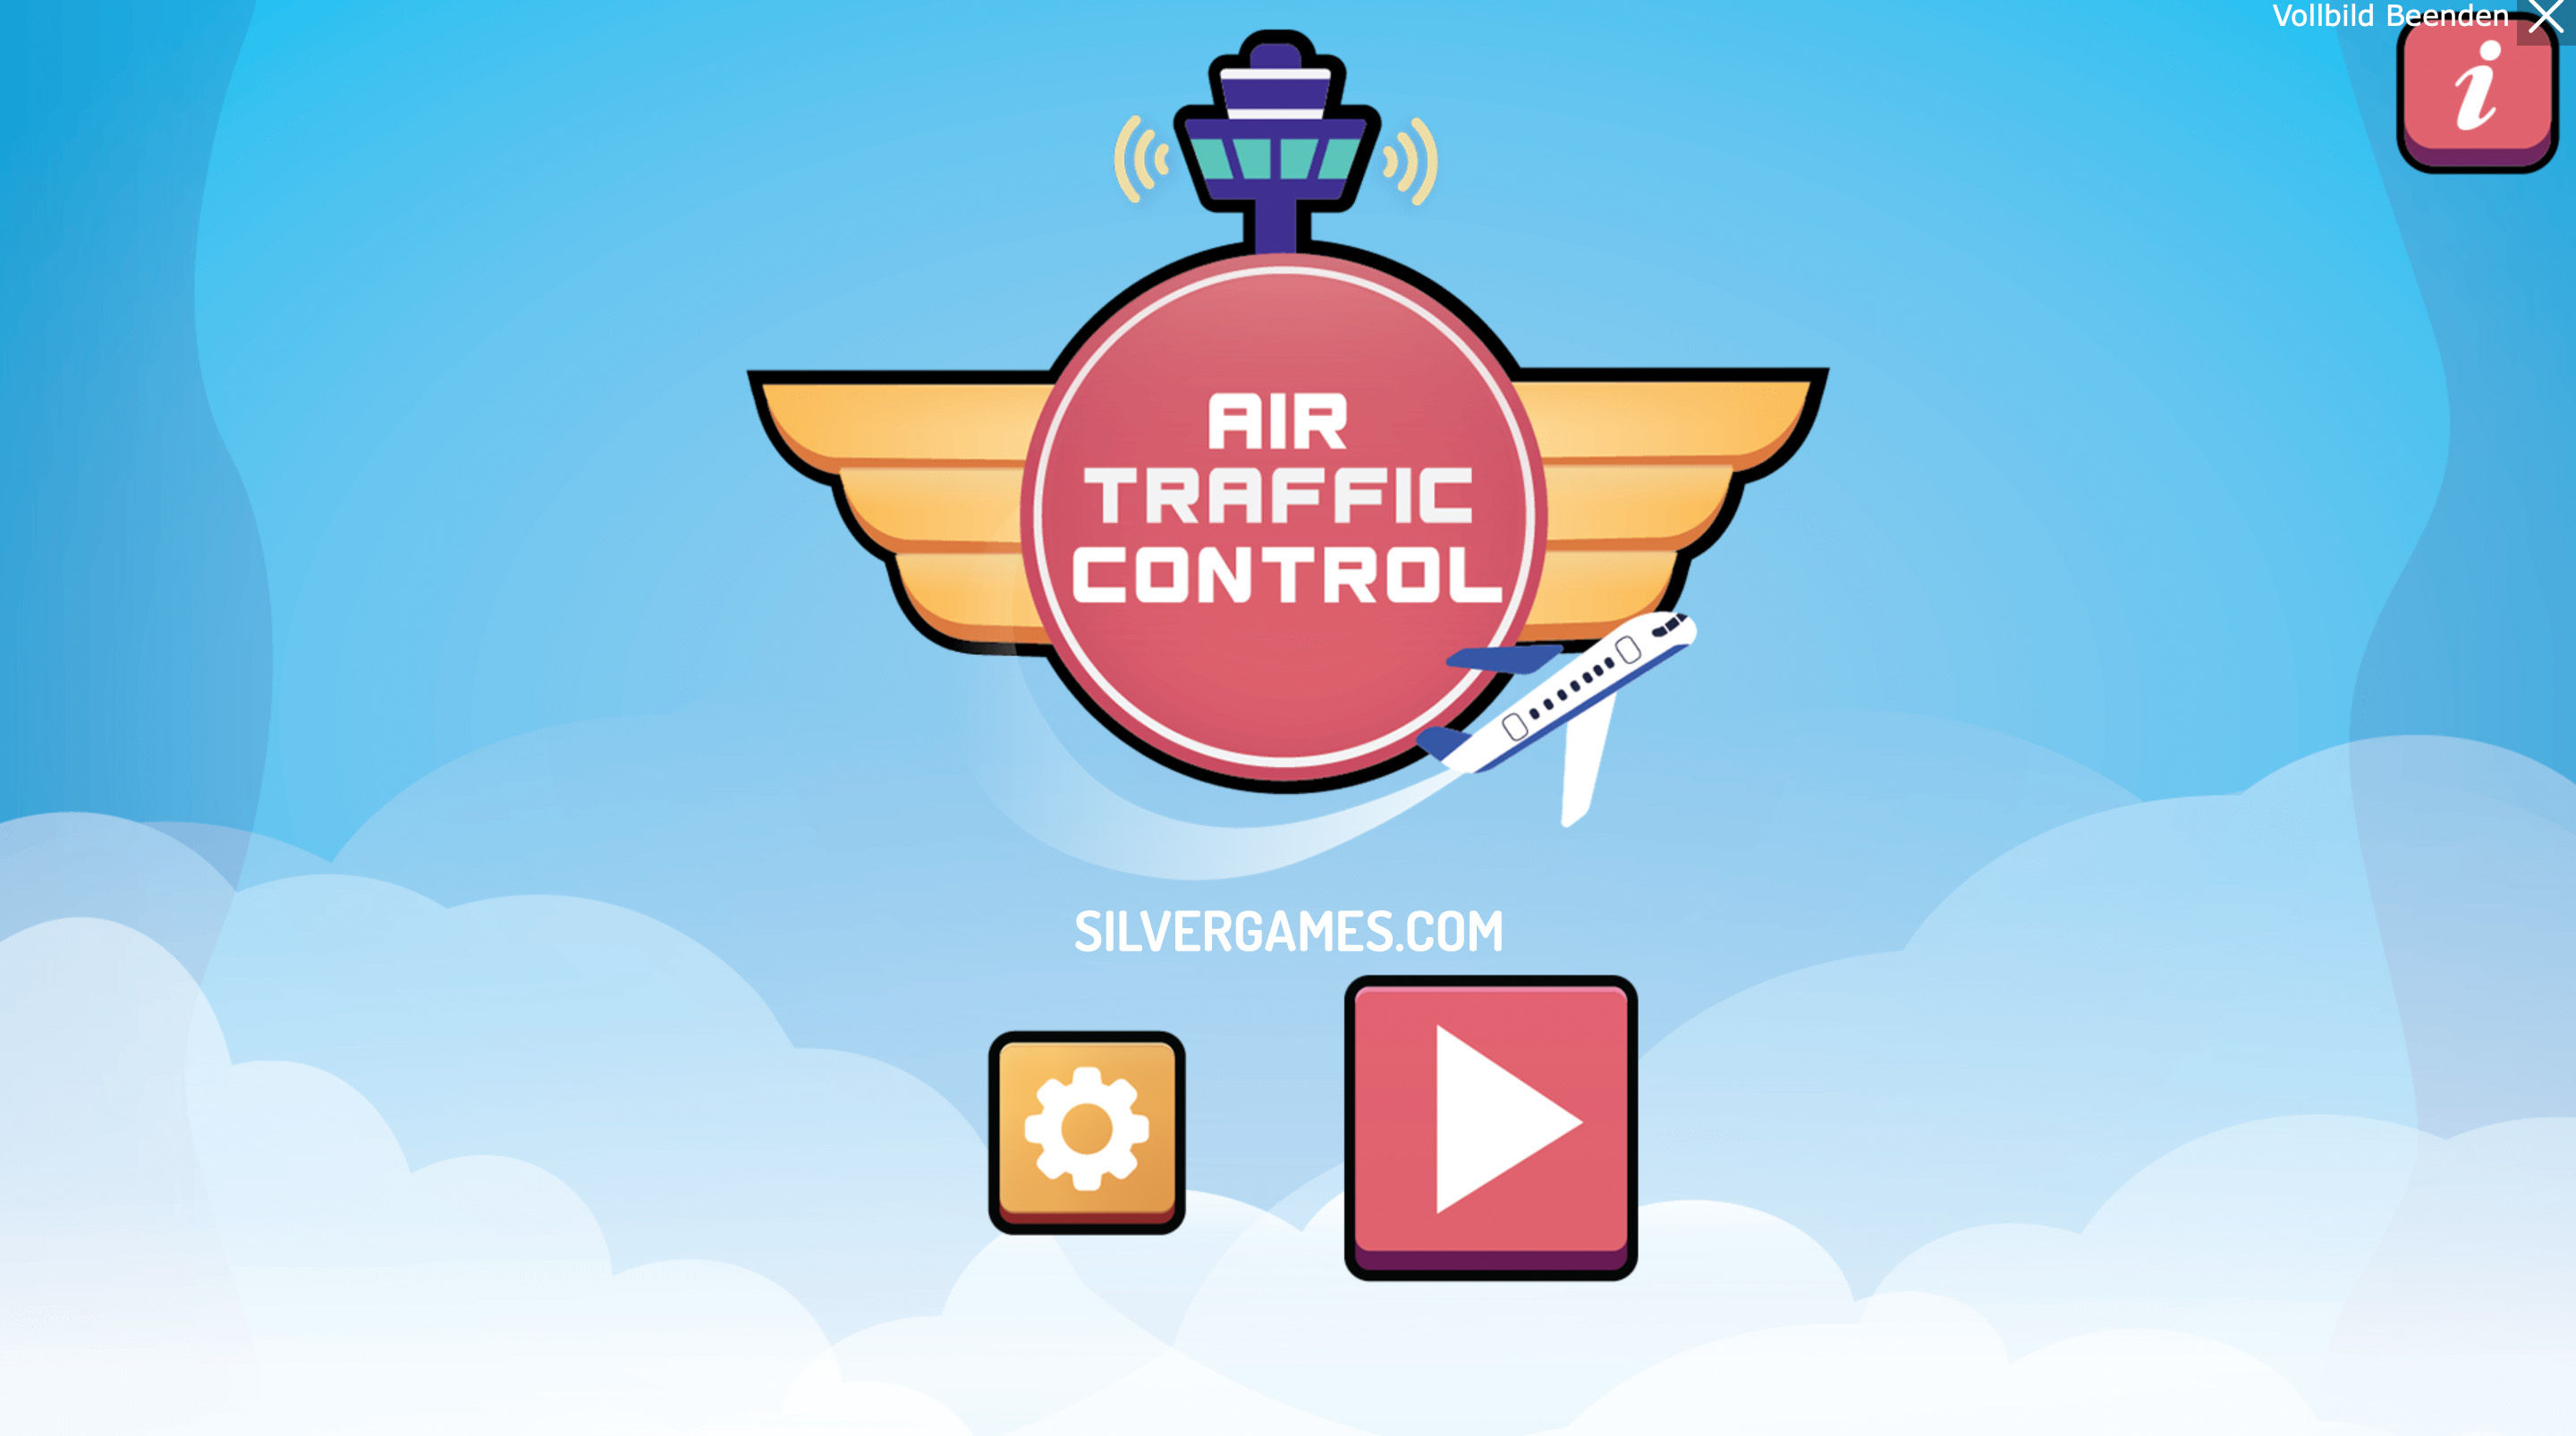 Airport Madness 4 - Jogue Online em SilverGames 🕹️